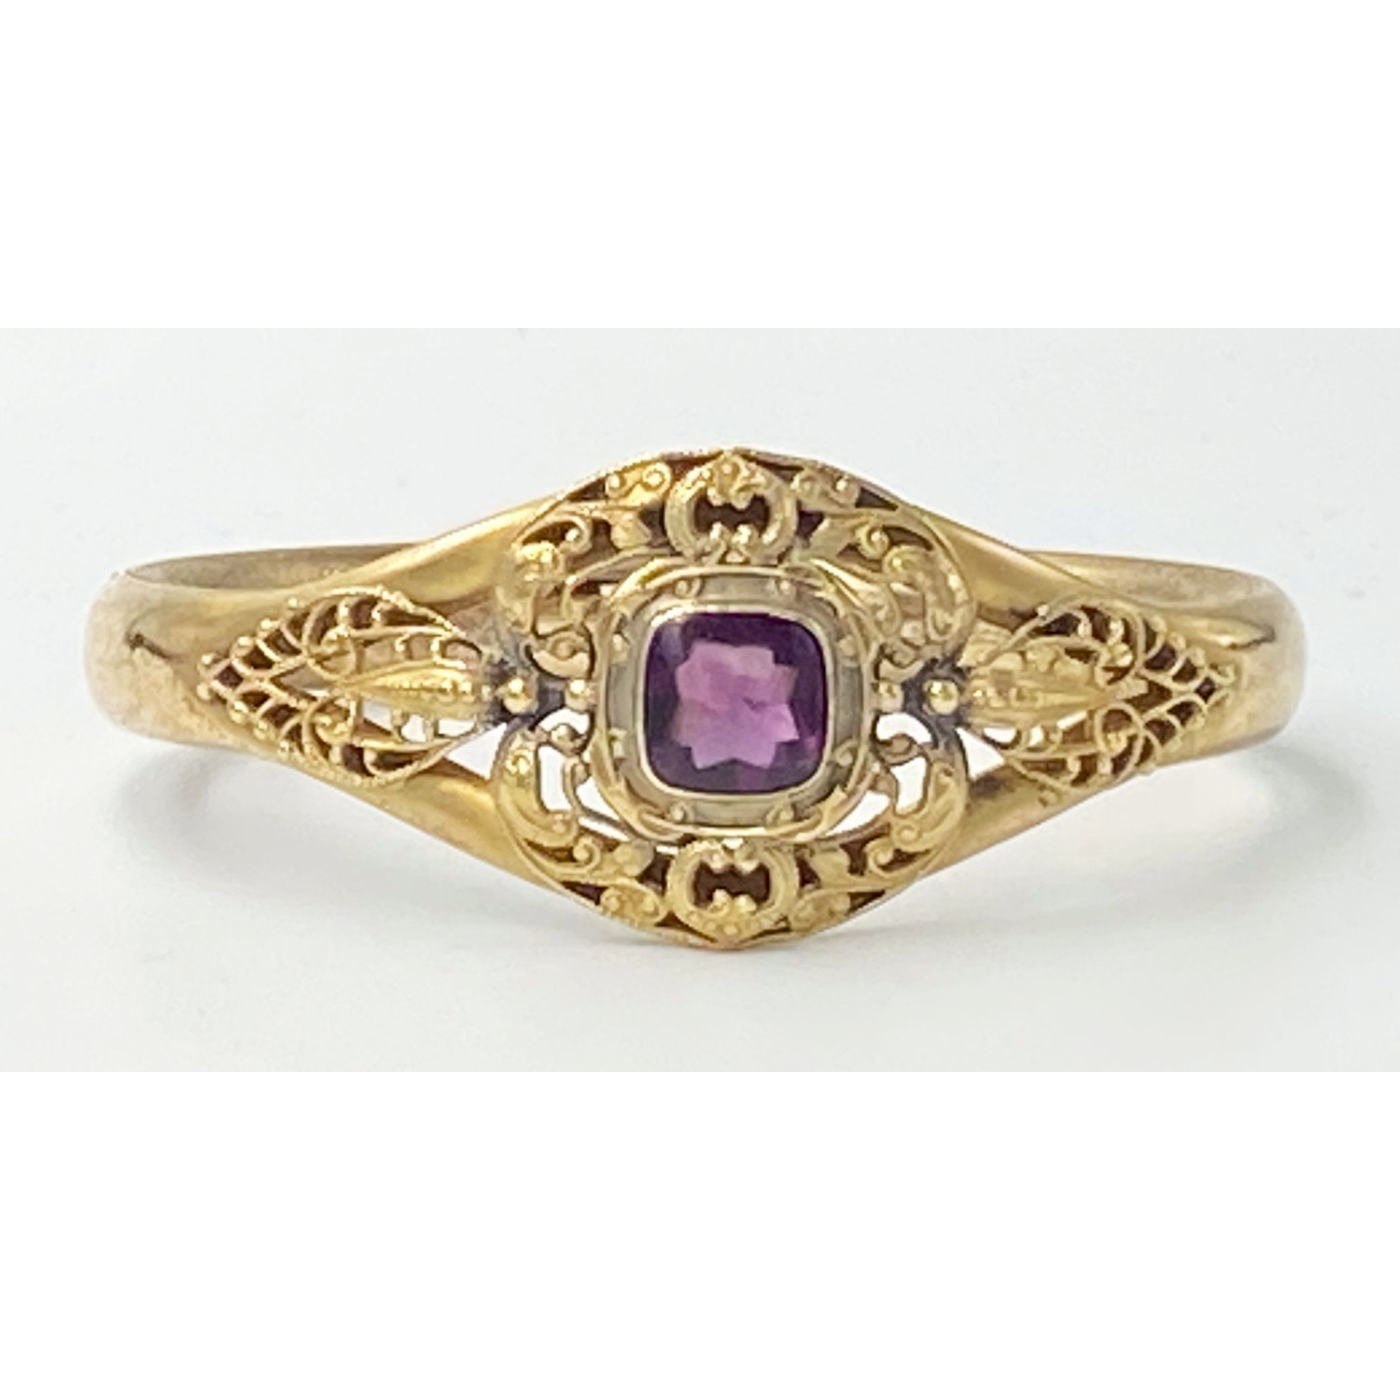 Sweet Ornate Rich Square Purple Ctr Slightly Smaller Wrist Engagement Bangle